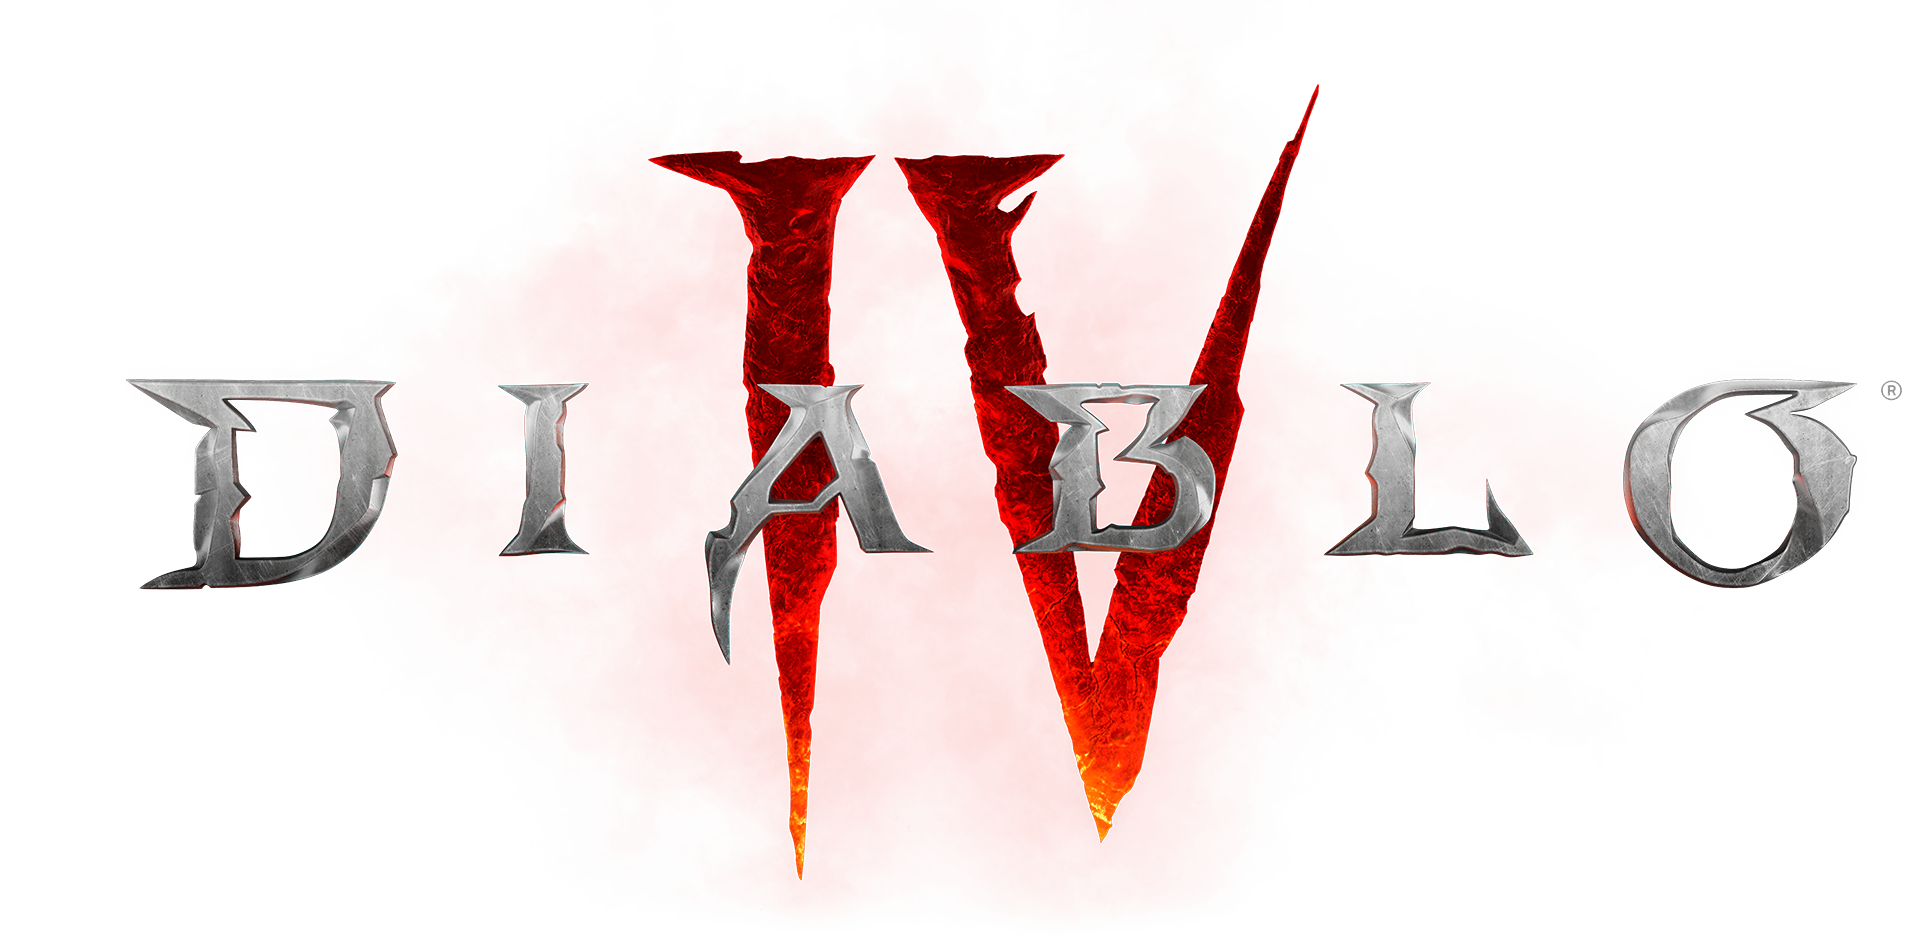 Diablo_IV_Logo_EN.png?imwidth=320&imdens